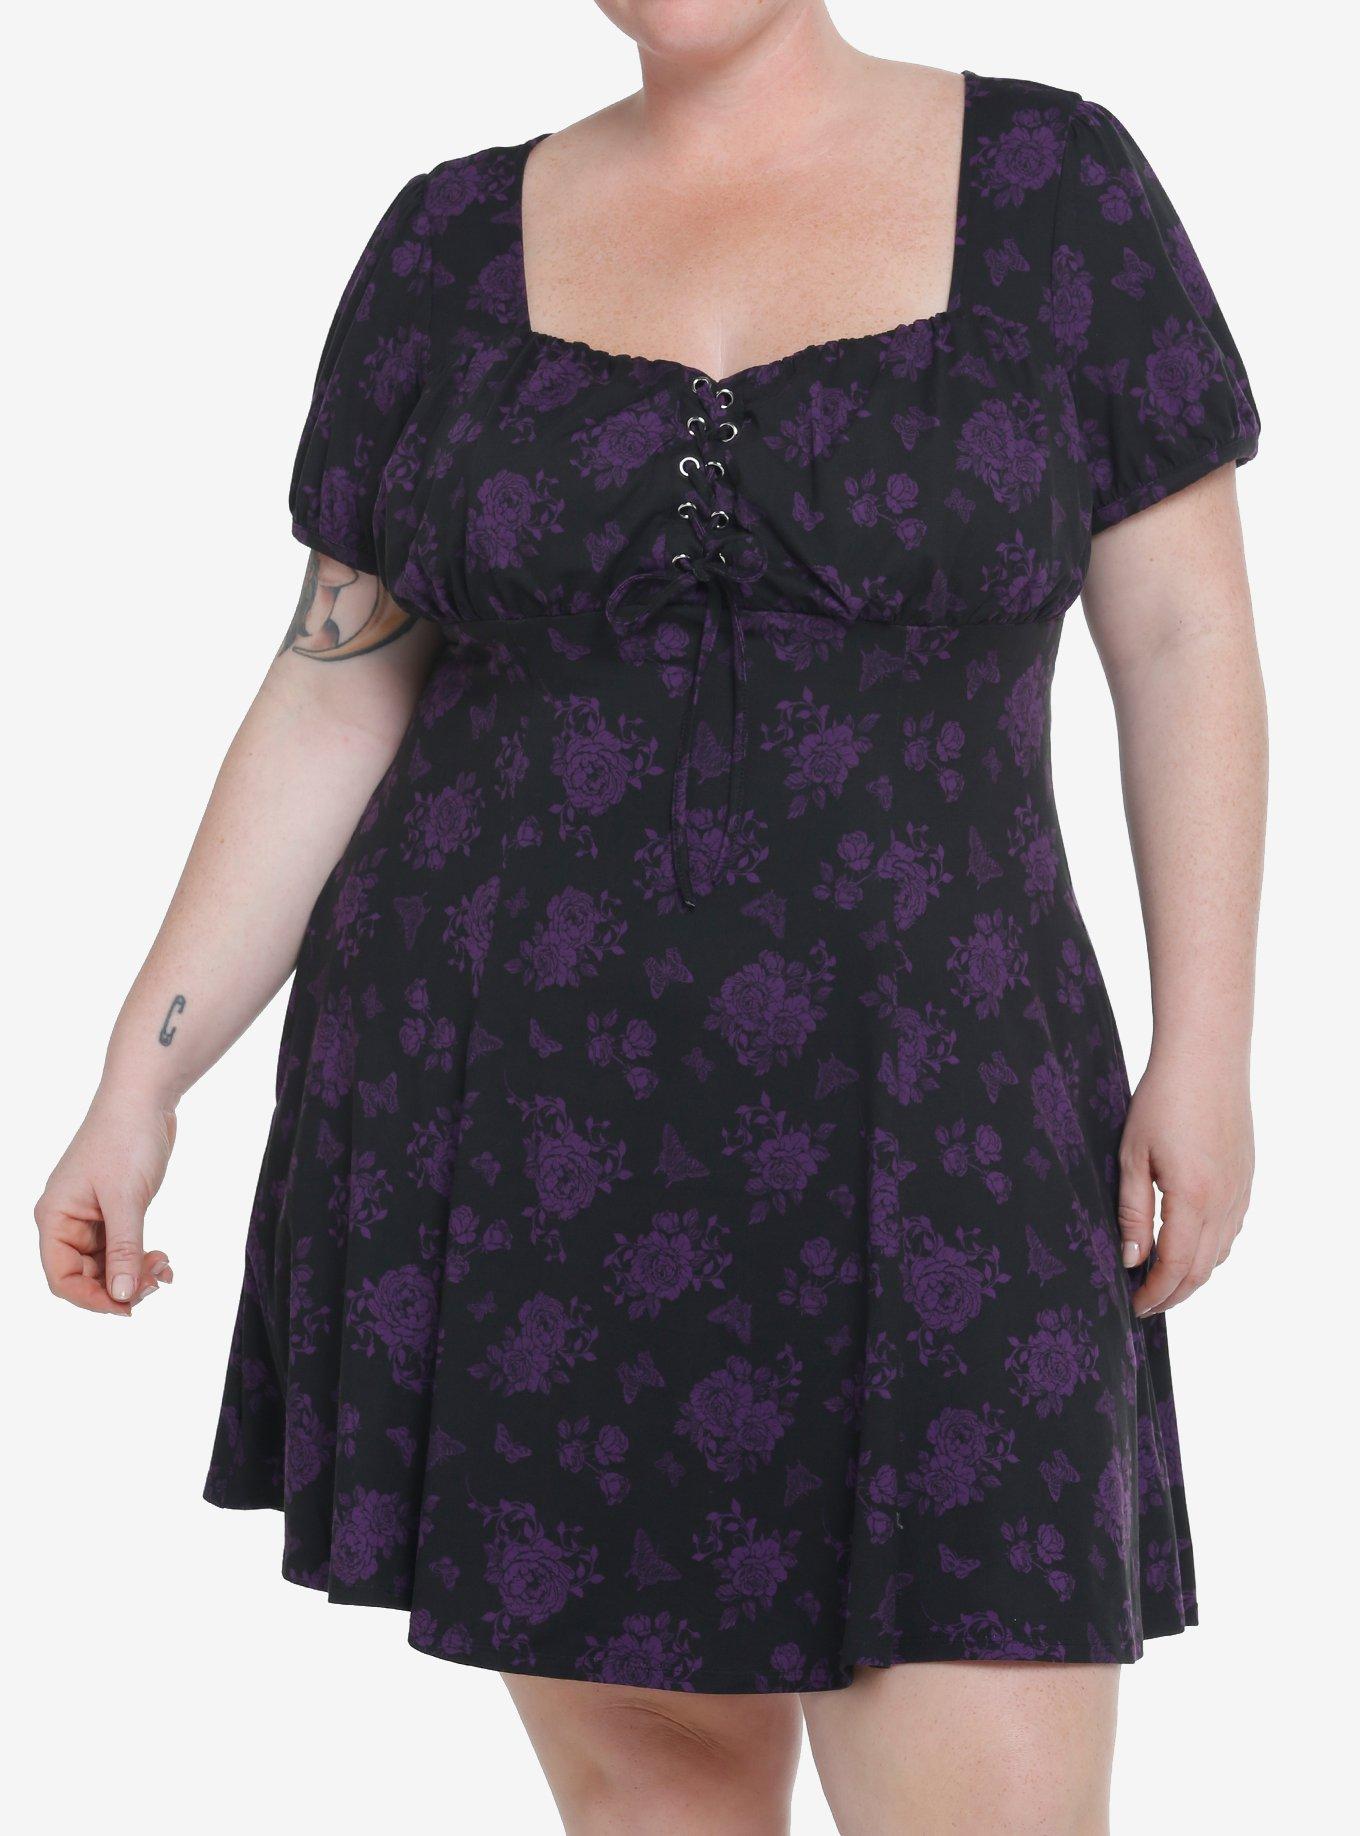 Cosmic Aura Black & Purple Rose Lace-Up Babydoll Dress Plus Size